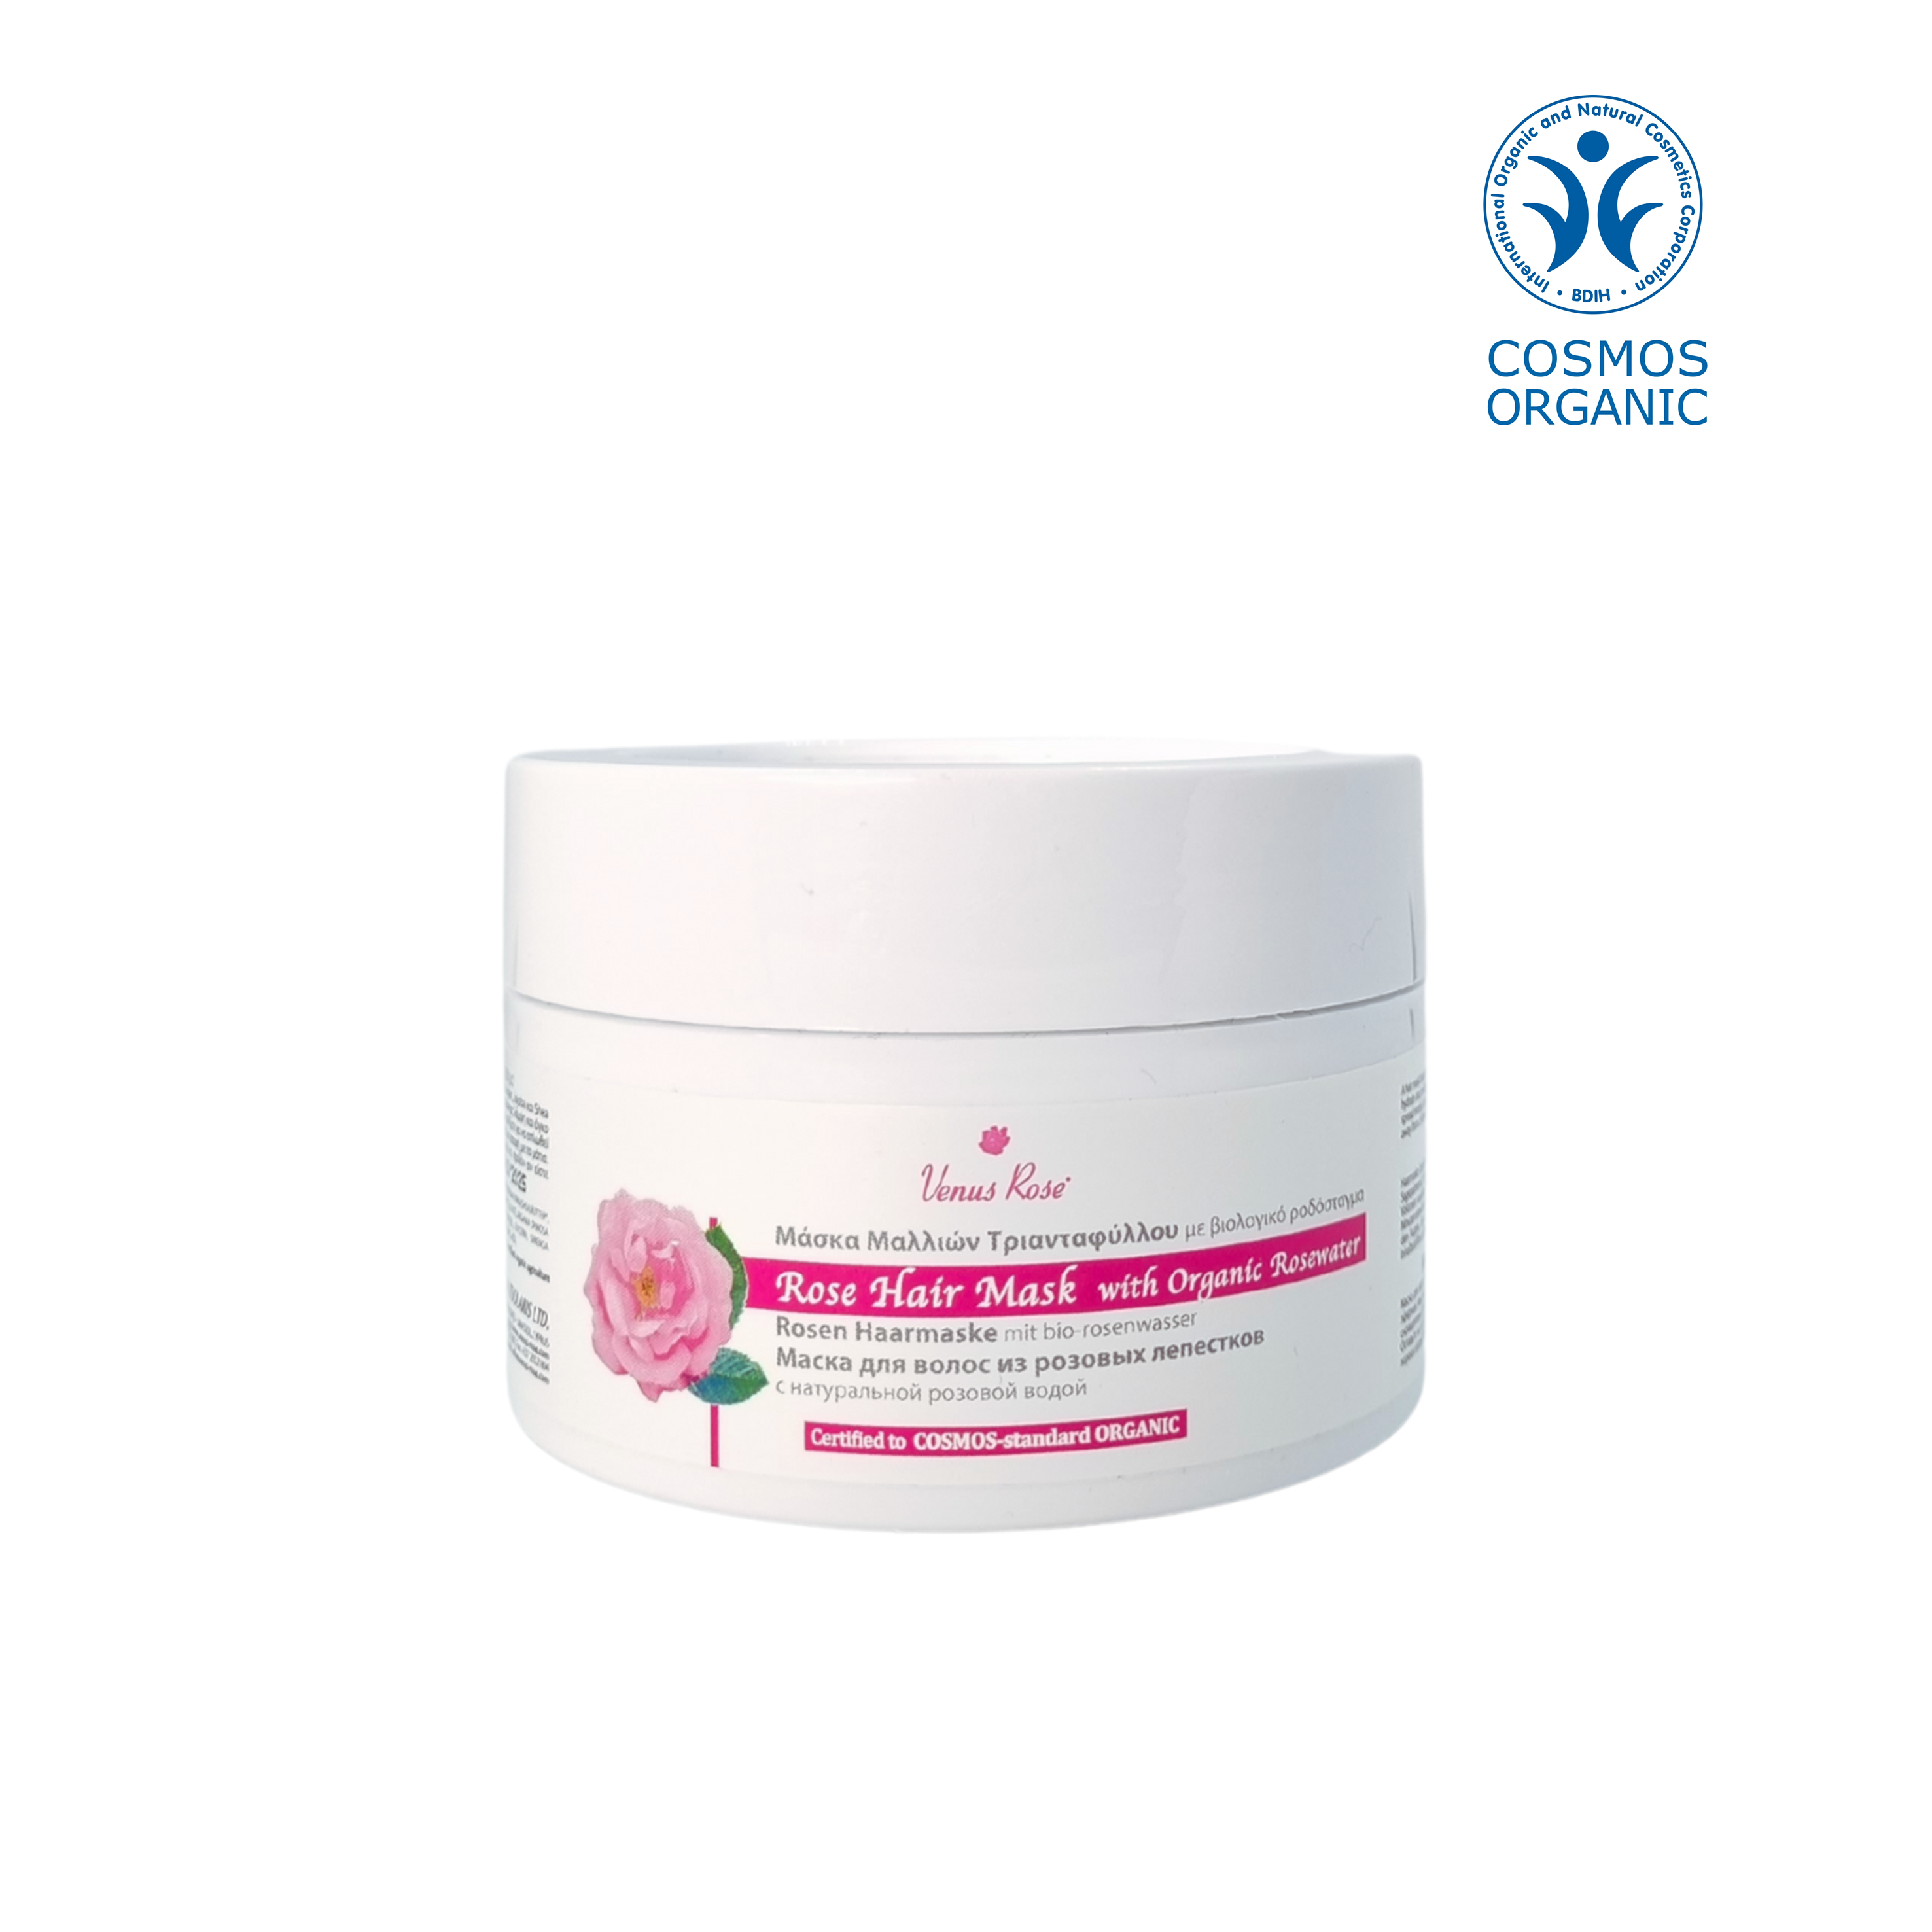 Rose Hair Mask with Organic Rosewater 250ml | Venus Rose Cosmetics